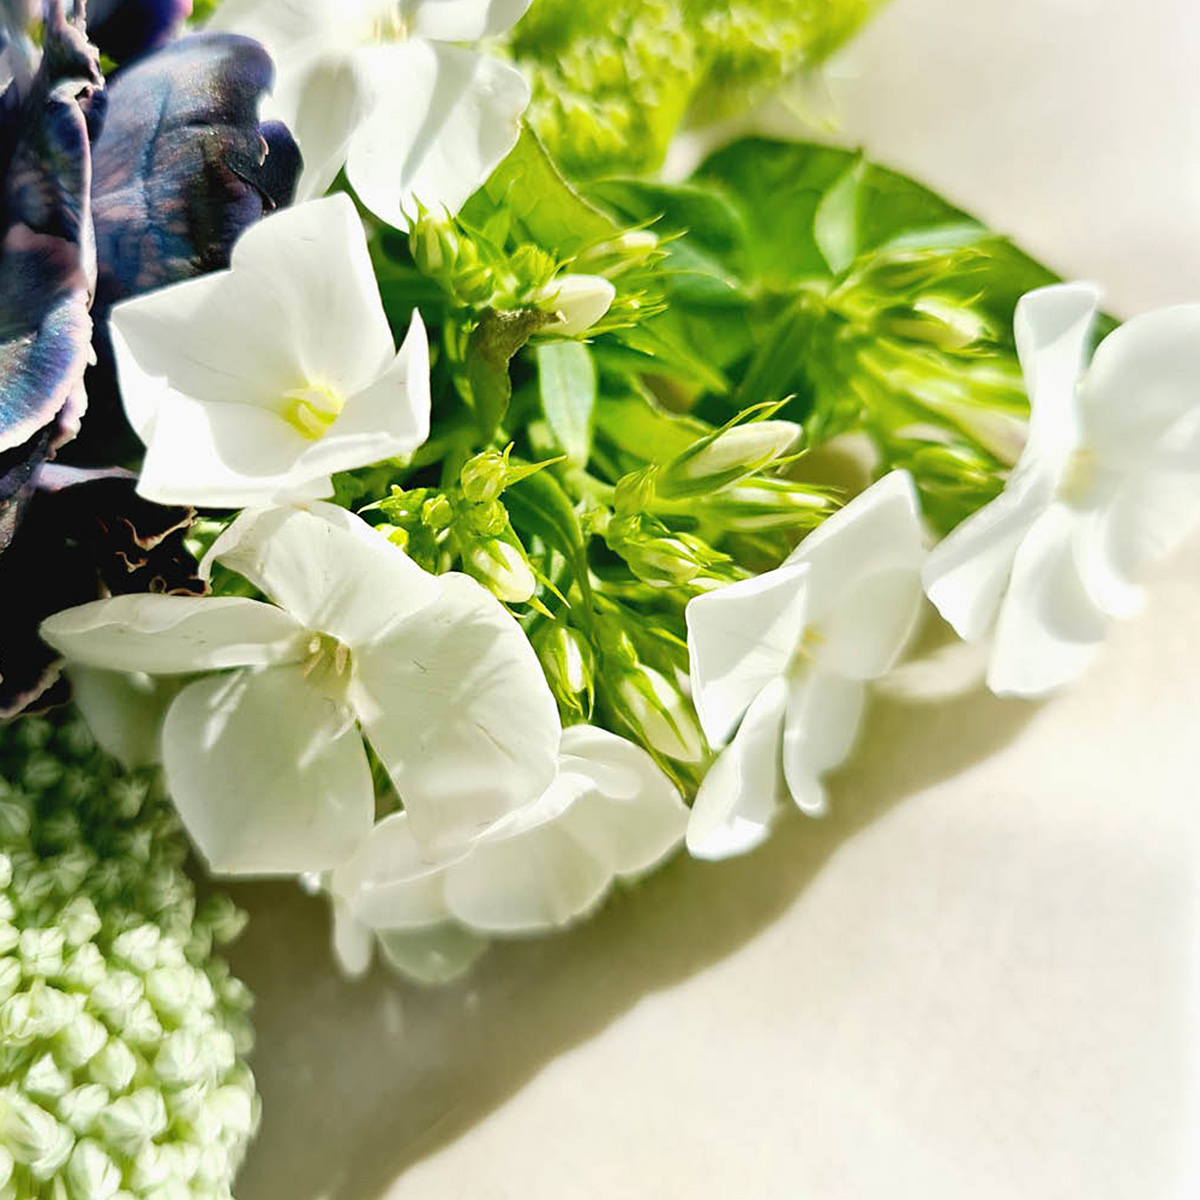 Wholesale Flowers in Season September - Phlox Whitecap